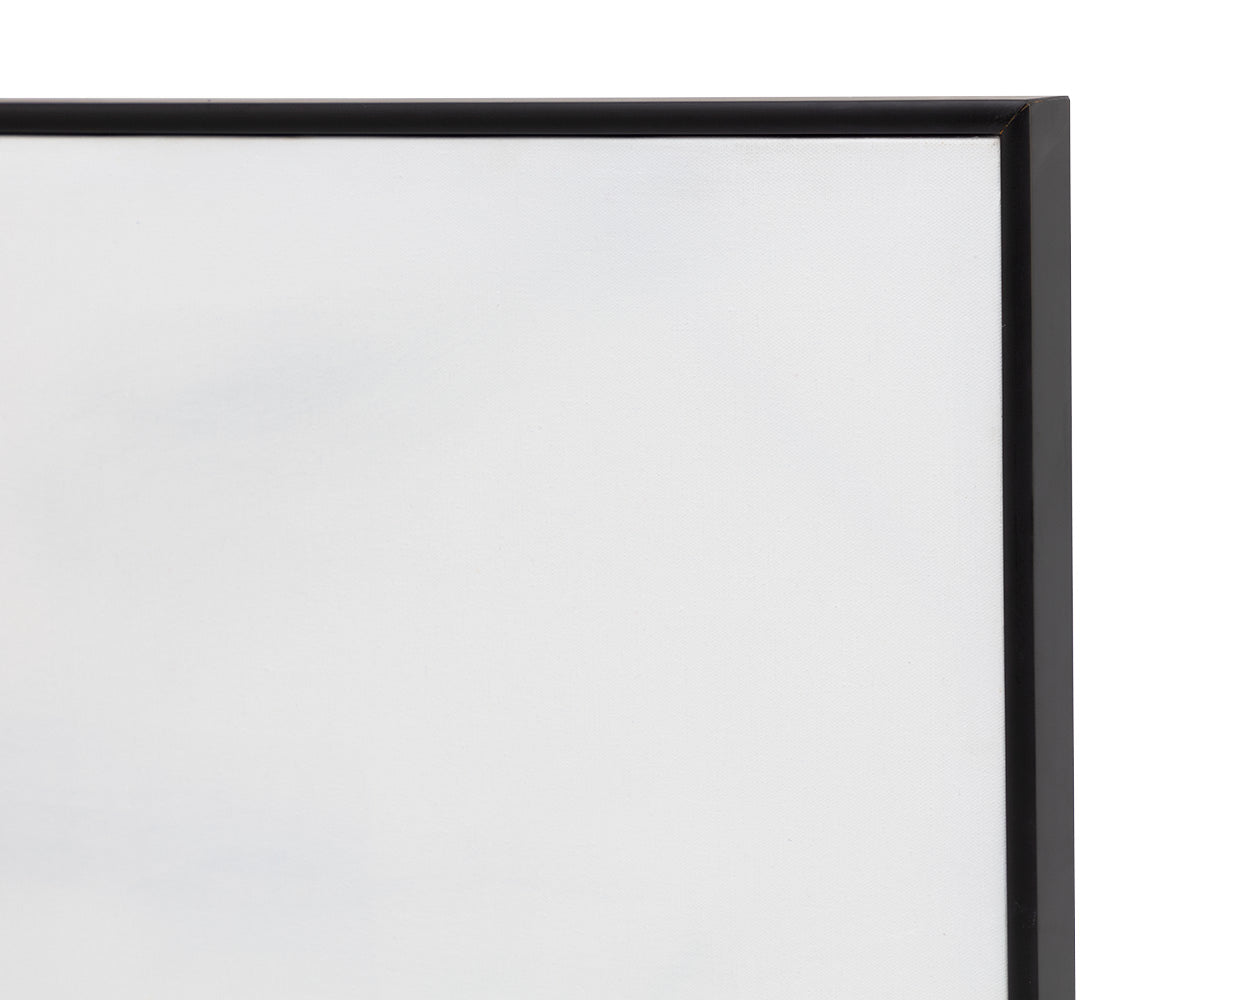 Lakeside Views (set Of 2) - 36" X 48" - Black Floater Frame